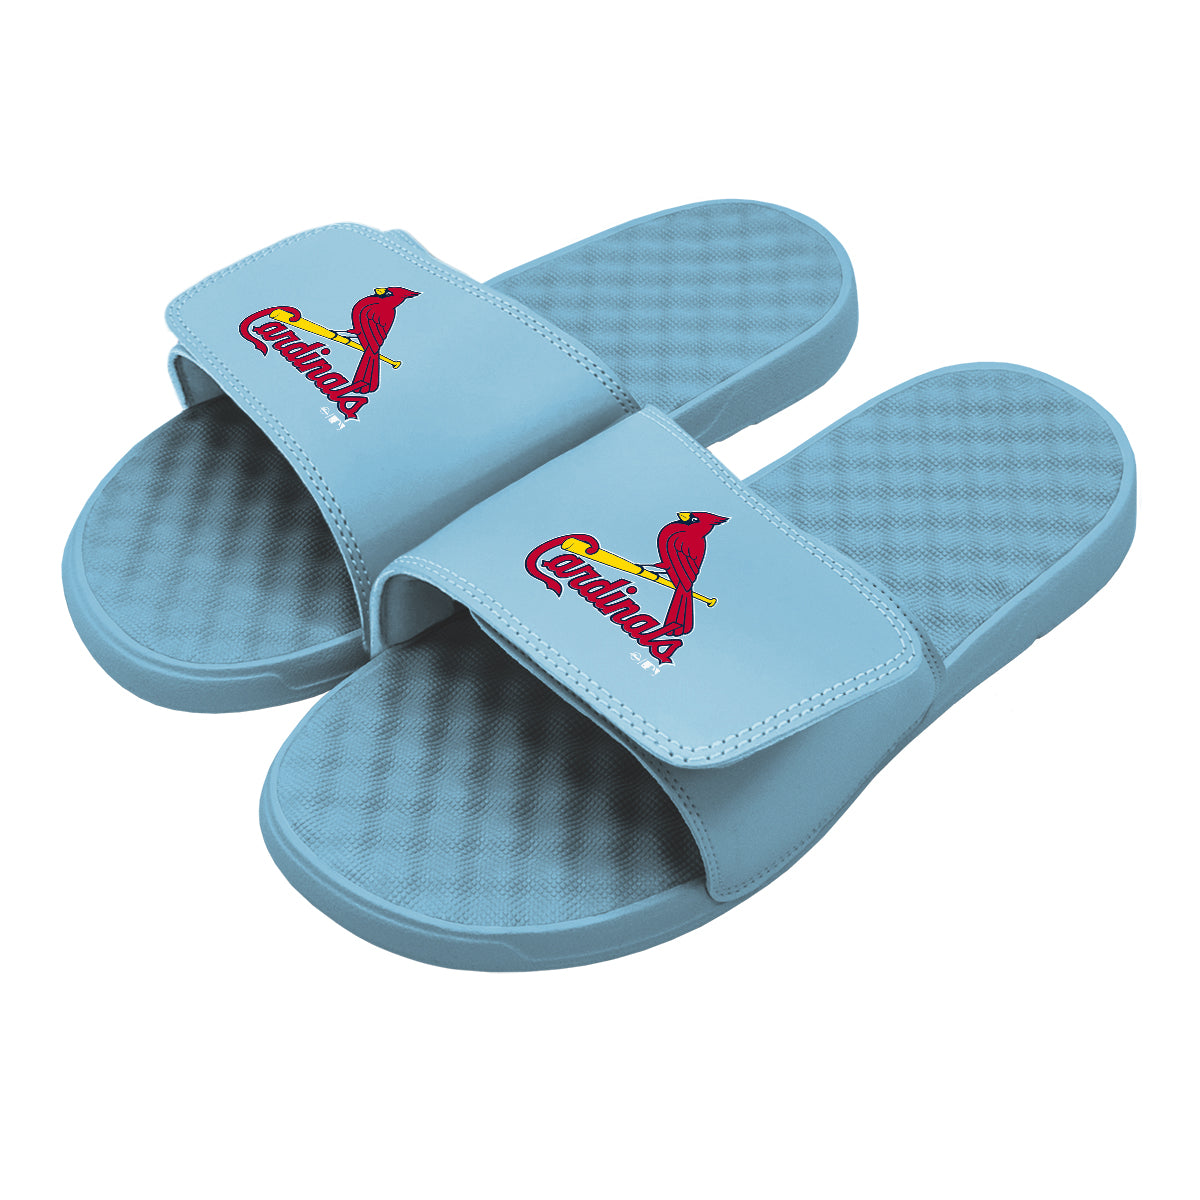 Cardinals Primary UNC Blue Slides